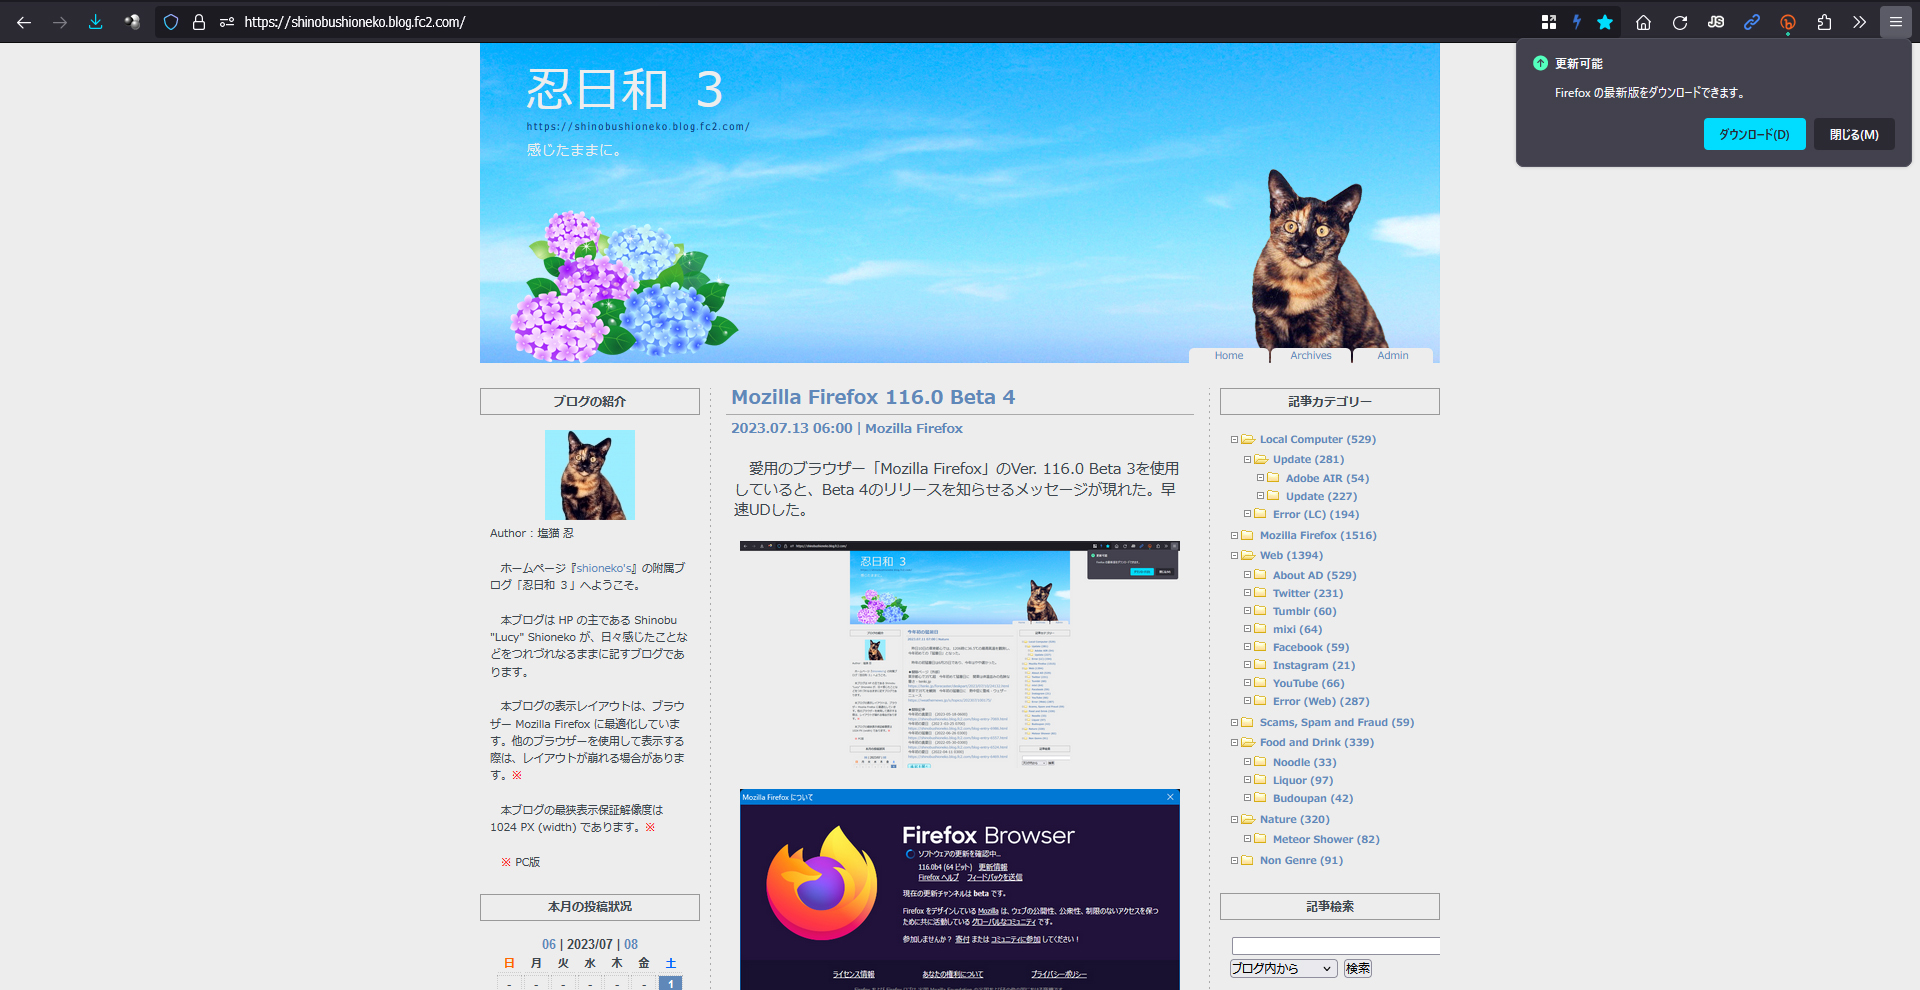 Mozilla Firefox 116.0 Beta 5